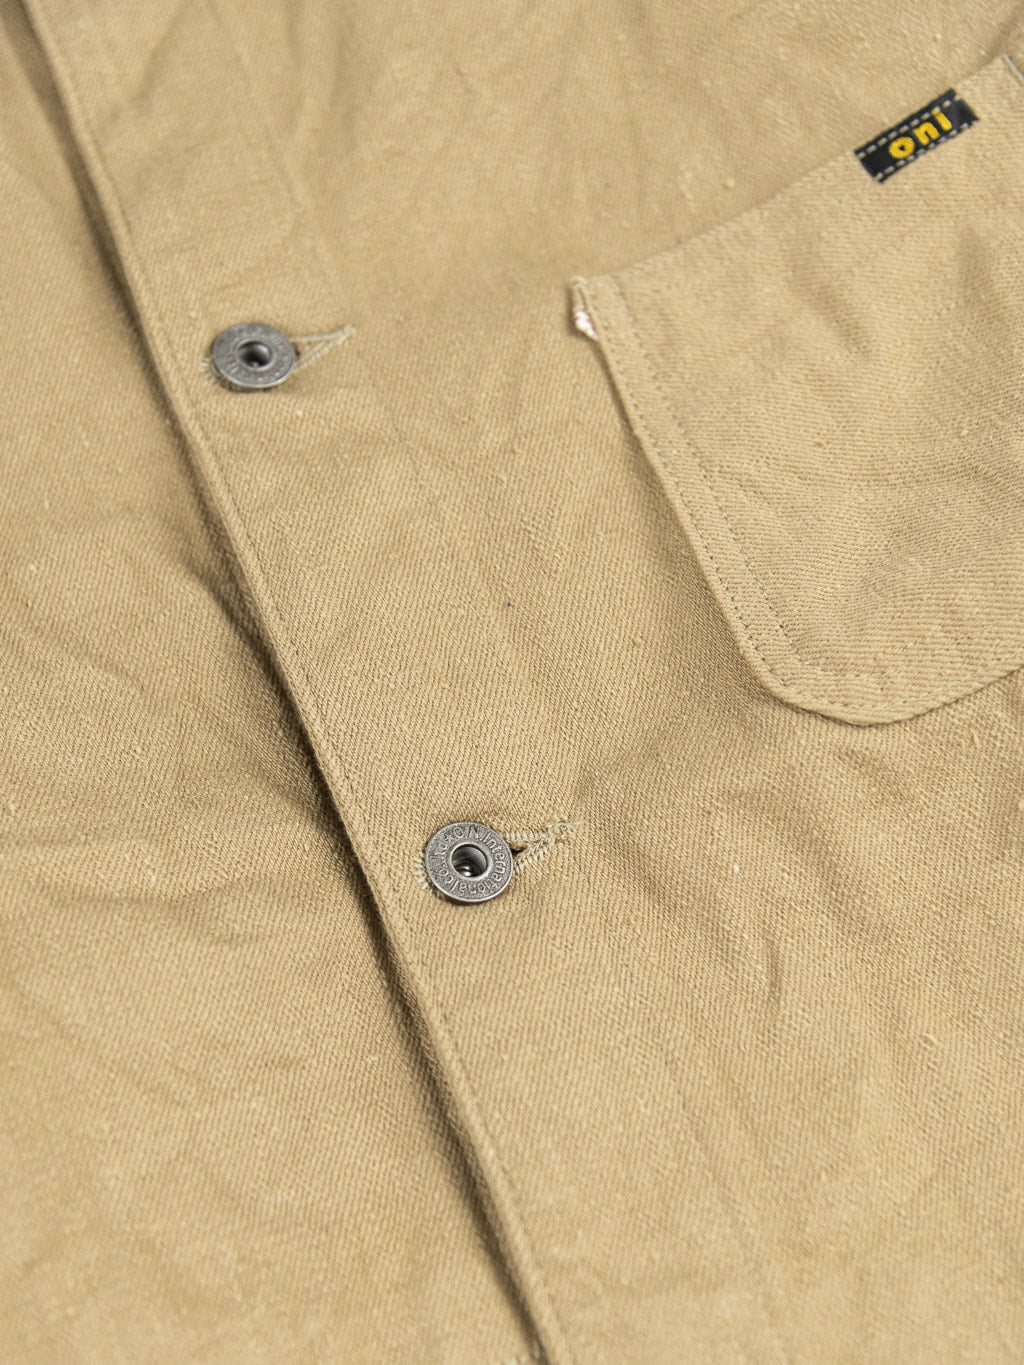 ONI Denim 03501 Sulfur Coverall Jacket Khaki Beige cotton texture